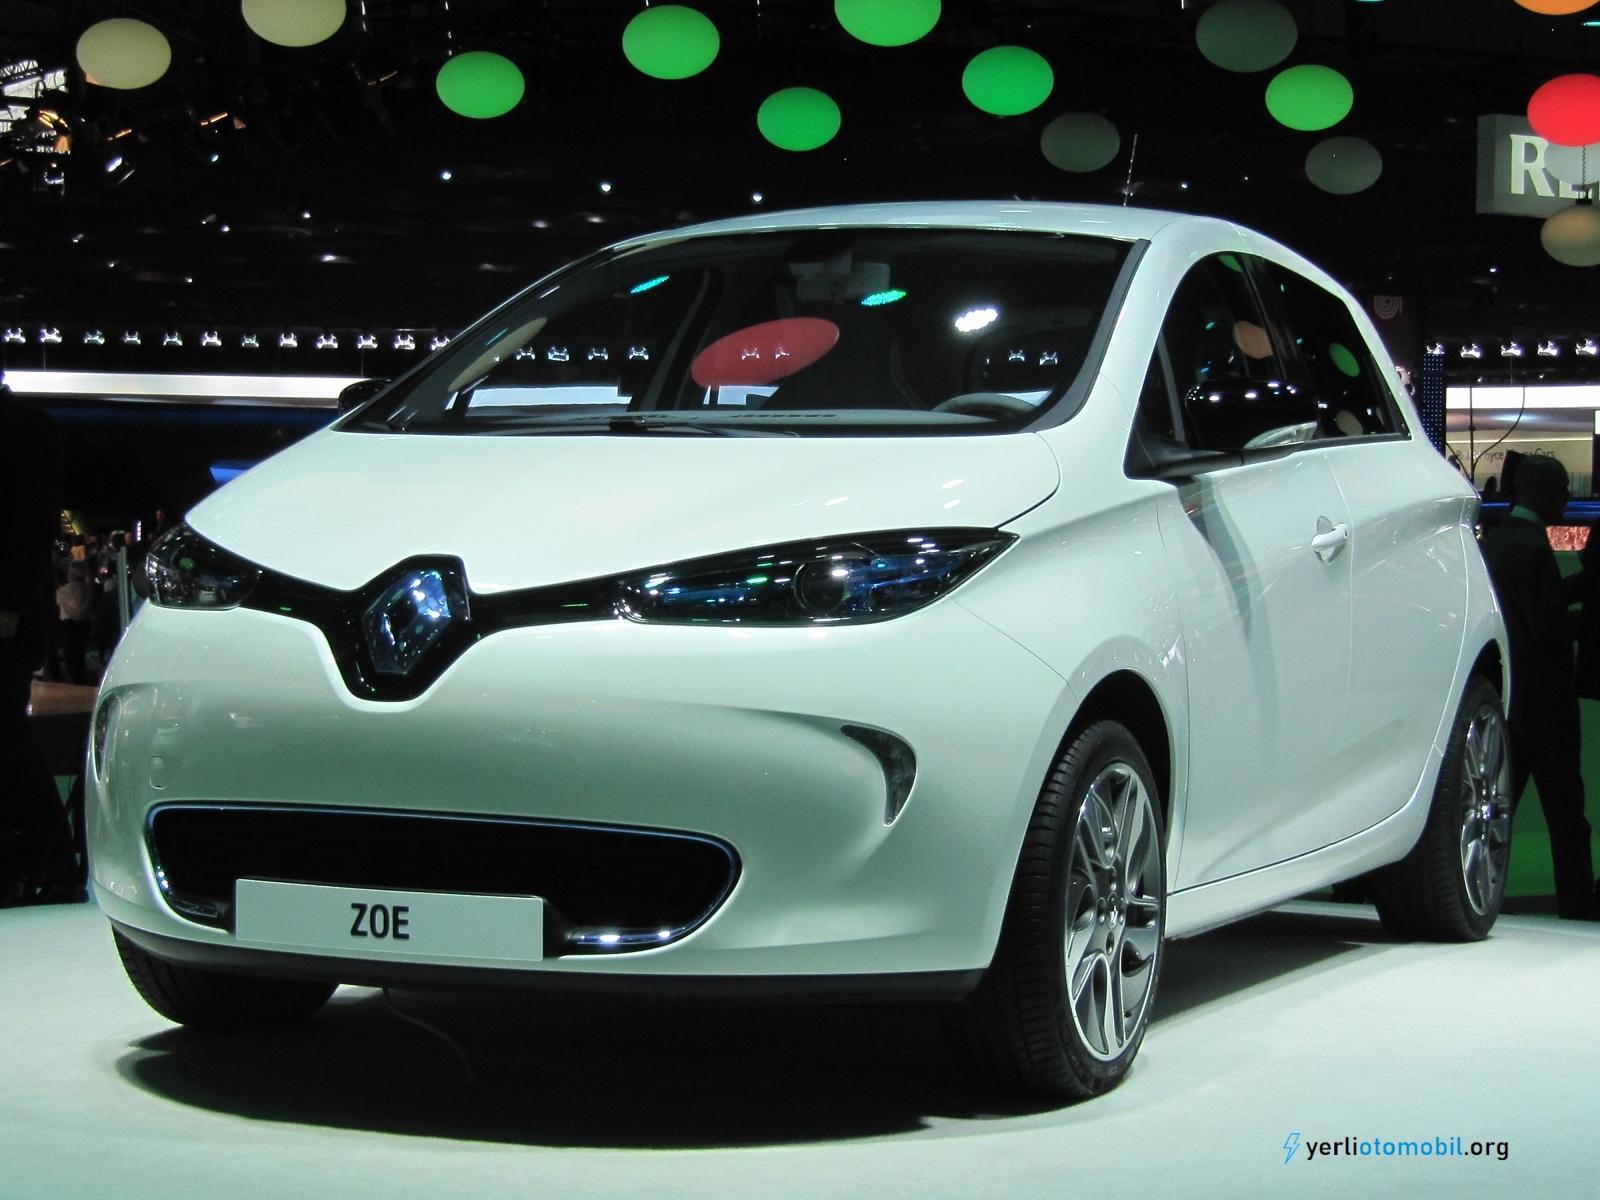 2013-renault-zoe-electric-car-european-model-at-2012-paris-auto-show_100404050_h.jpg